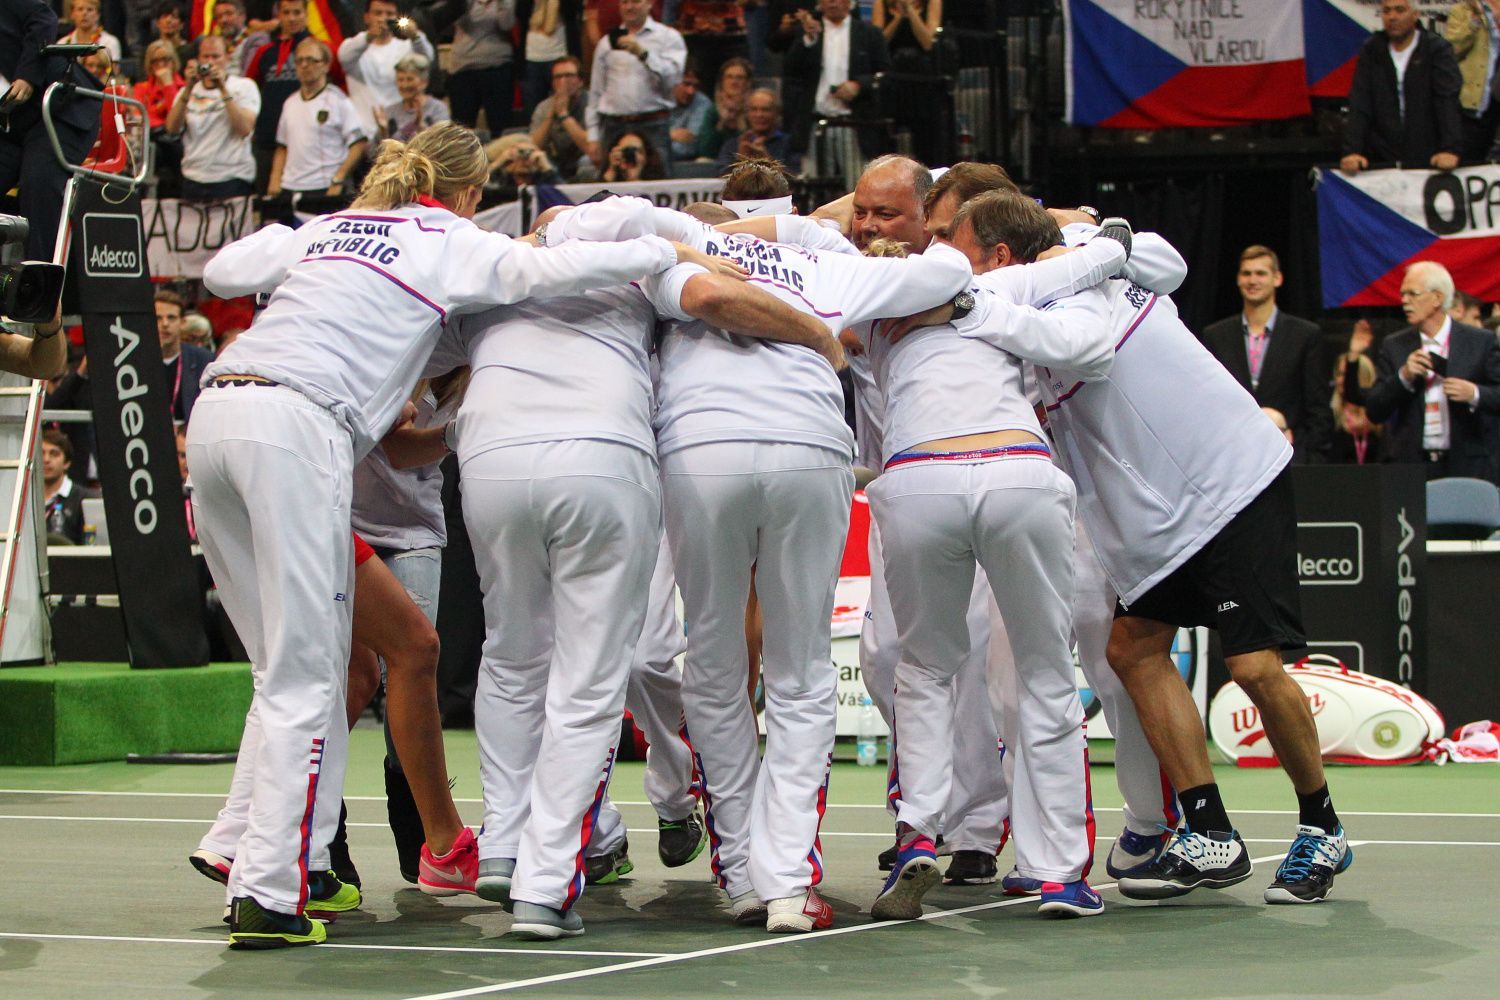 Fed Cup, finále 2014: radost českého týmu